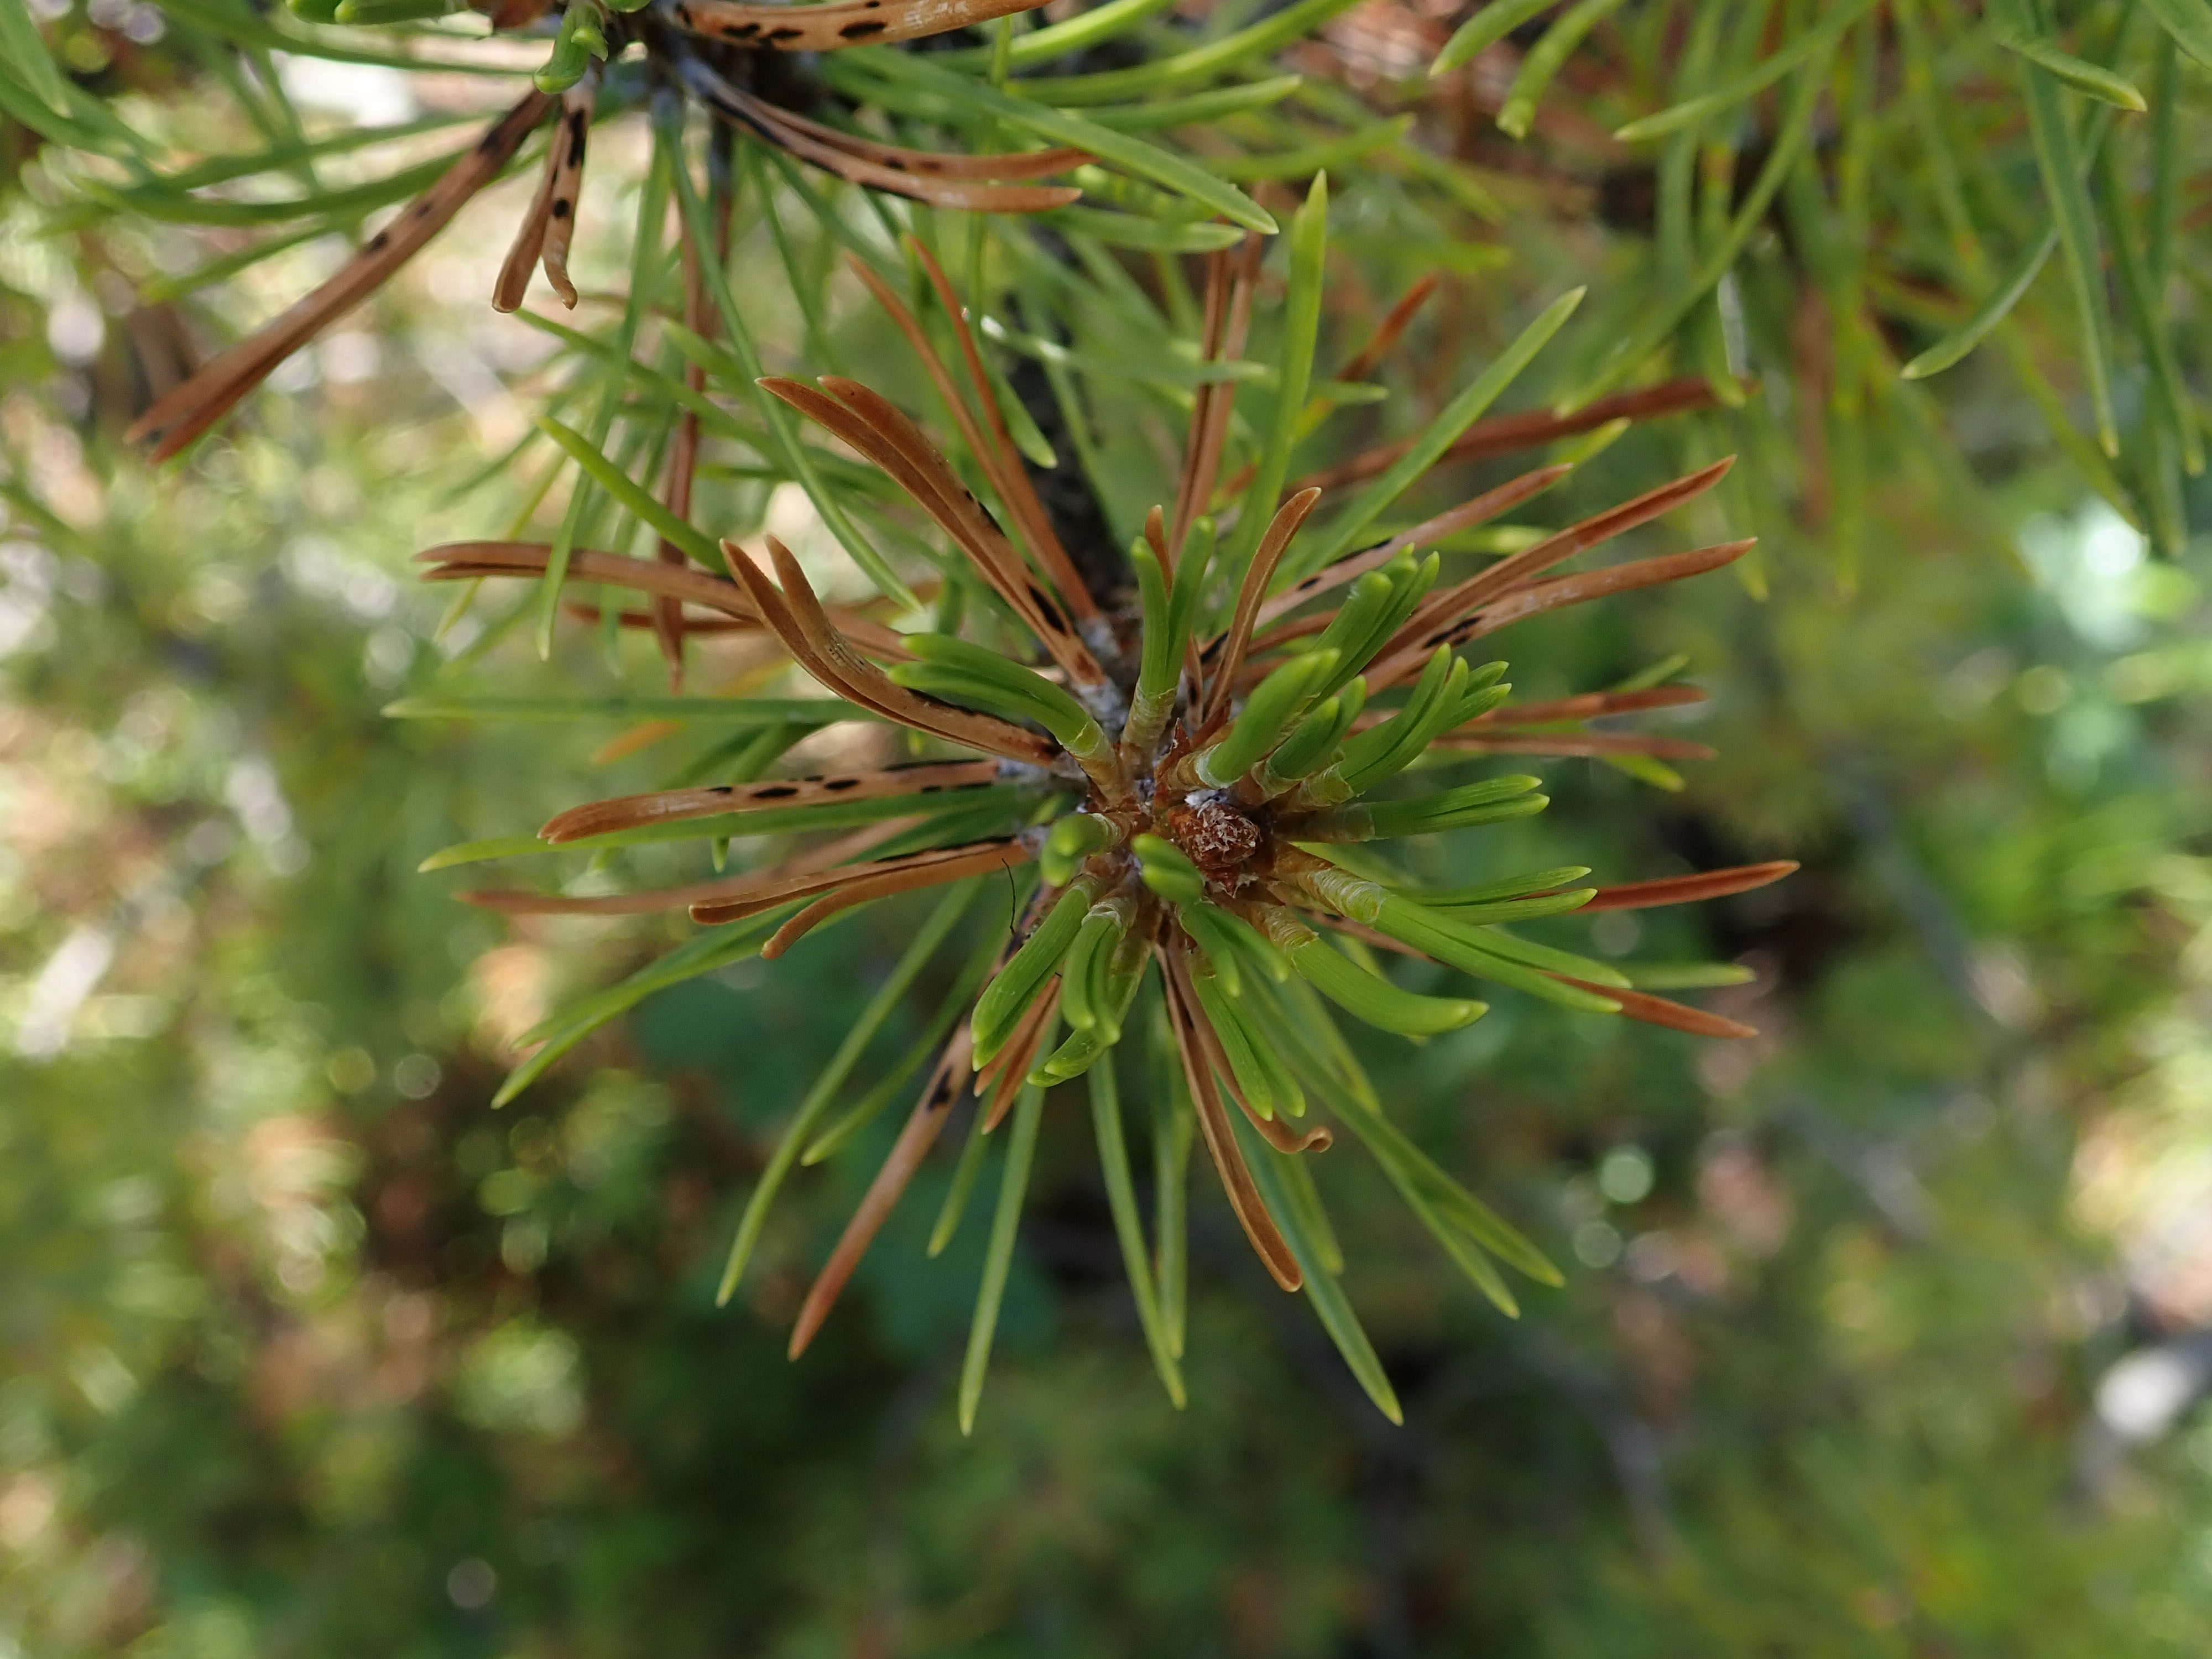 Fruiting bodies of Elytroderma deformans on Lodgepole pine.